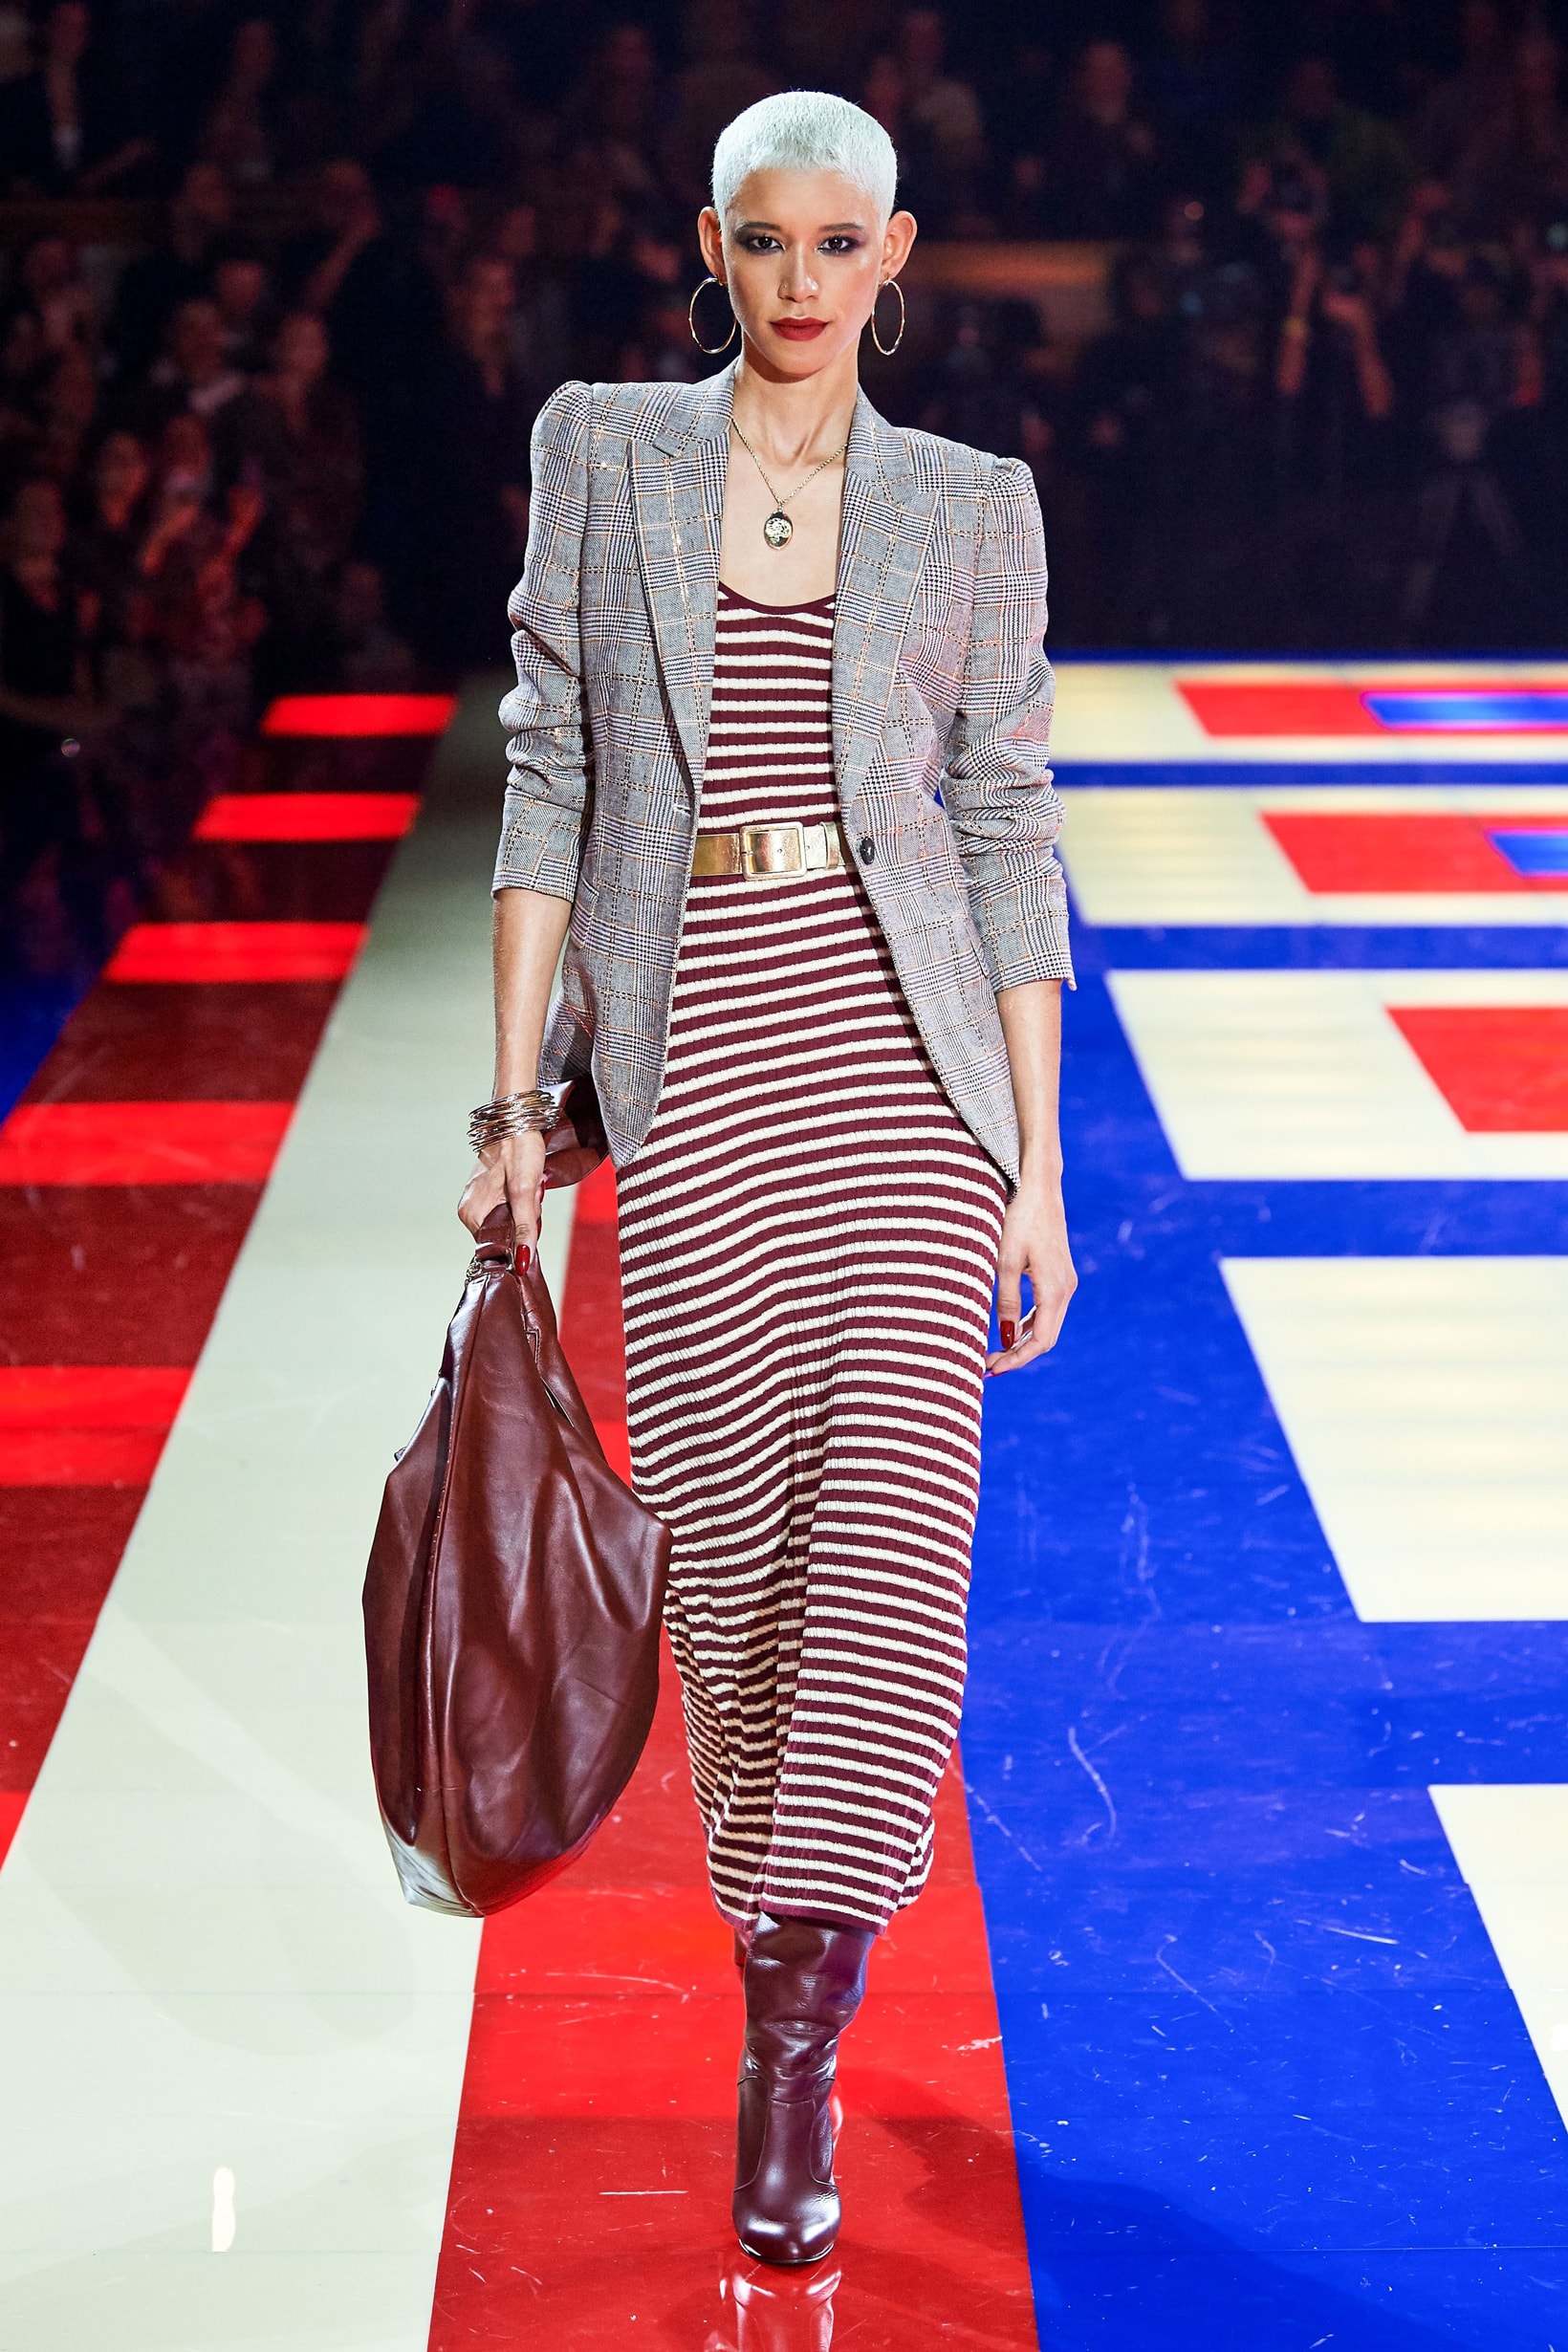 Tommy Hilfiger TommyNow Zendaya Spring 2019 Paris Fashion Week Show Collection Dilone Striped Dress Maroon Blazer Grey